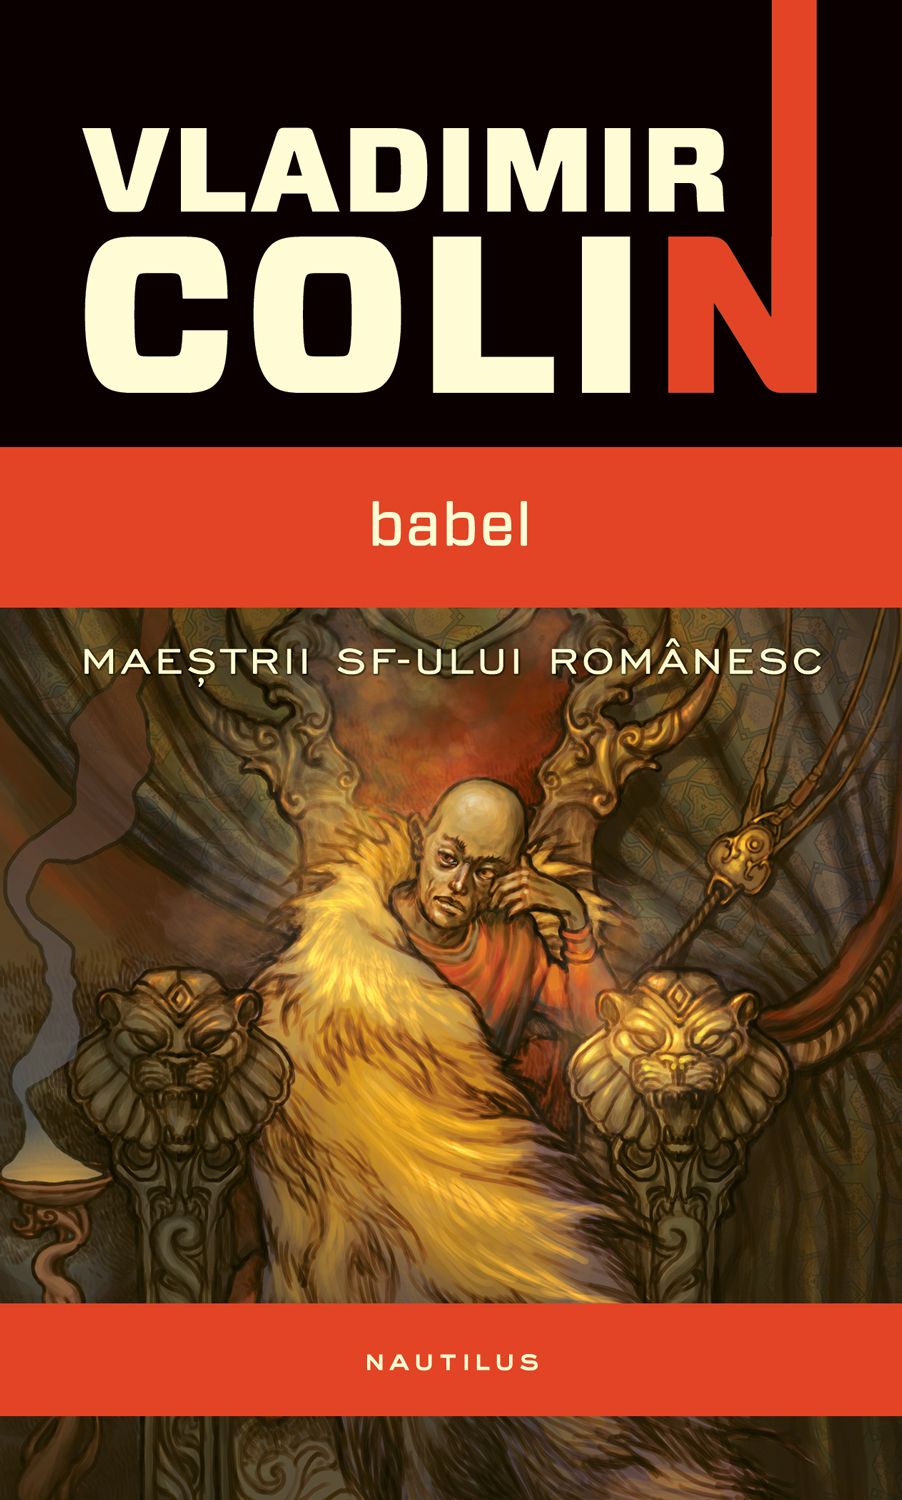 eBook Babel - Vladimir Colin